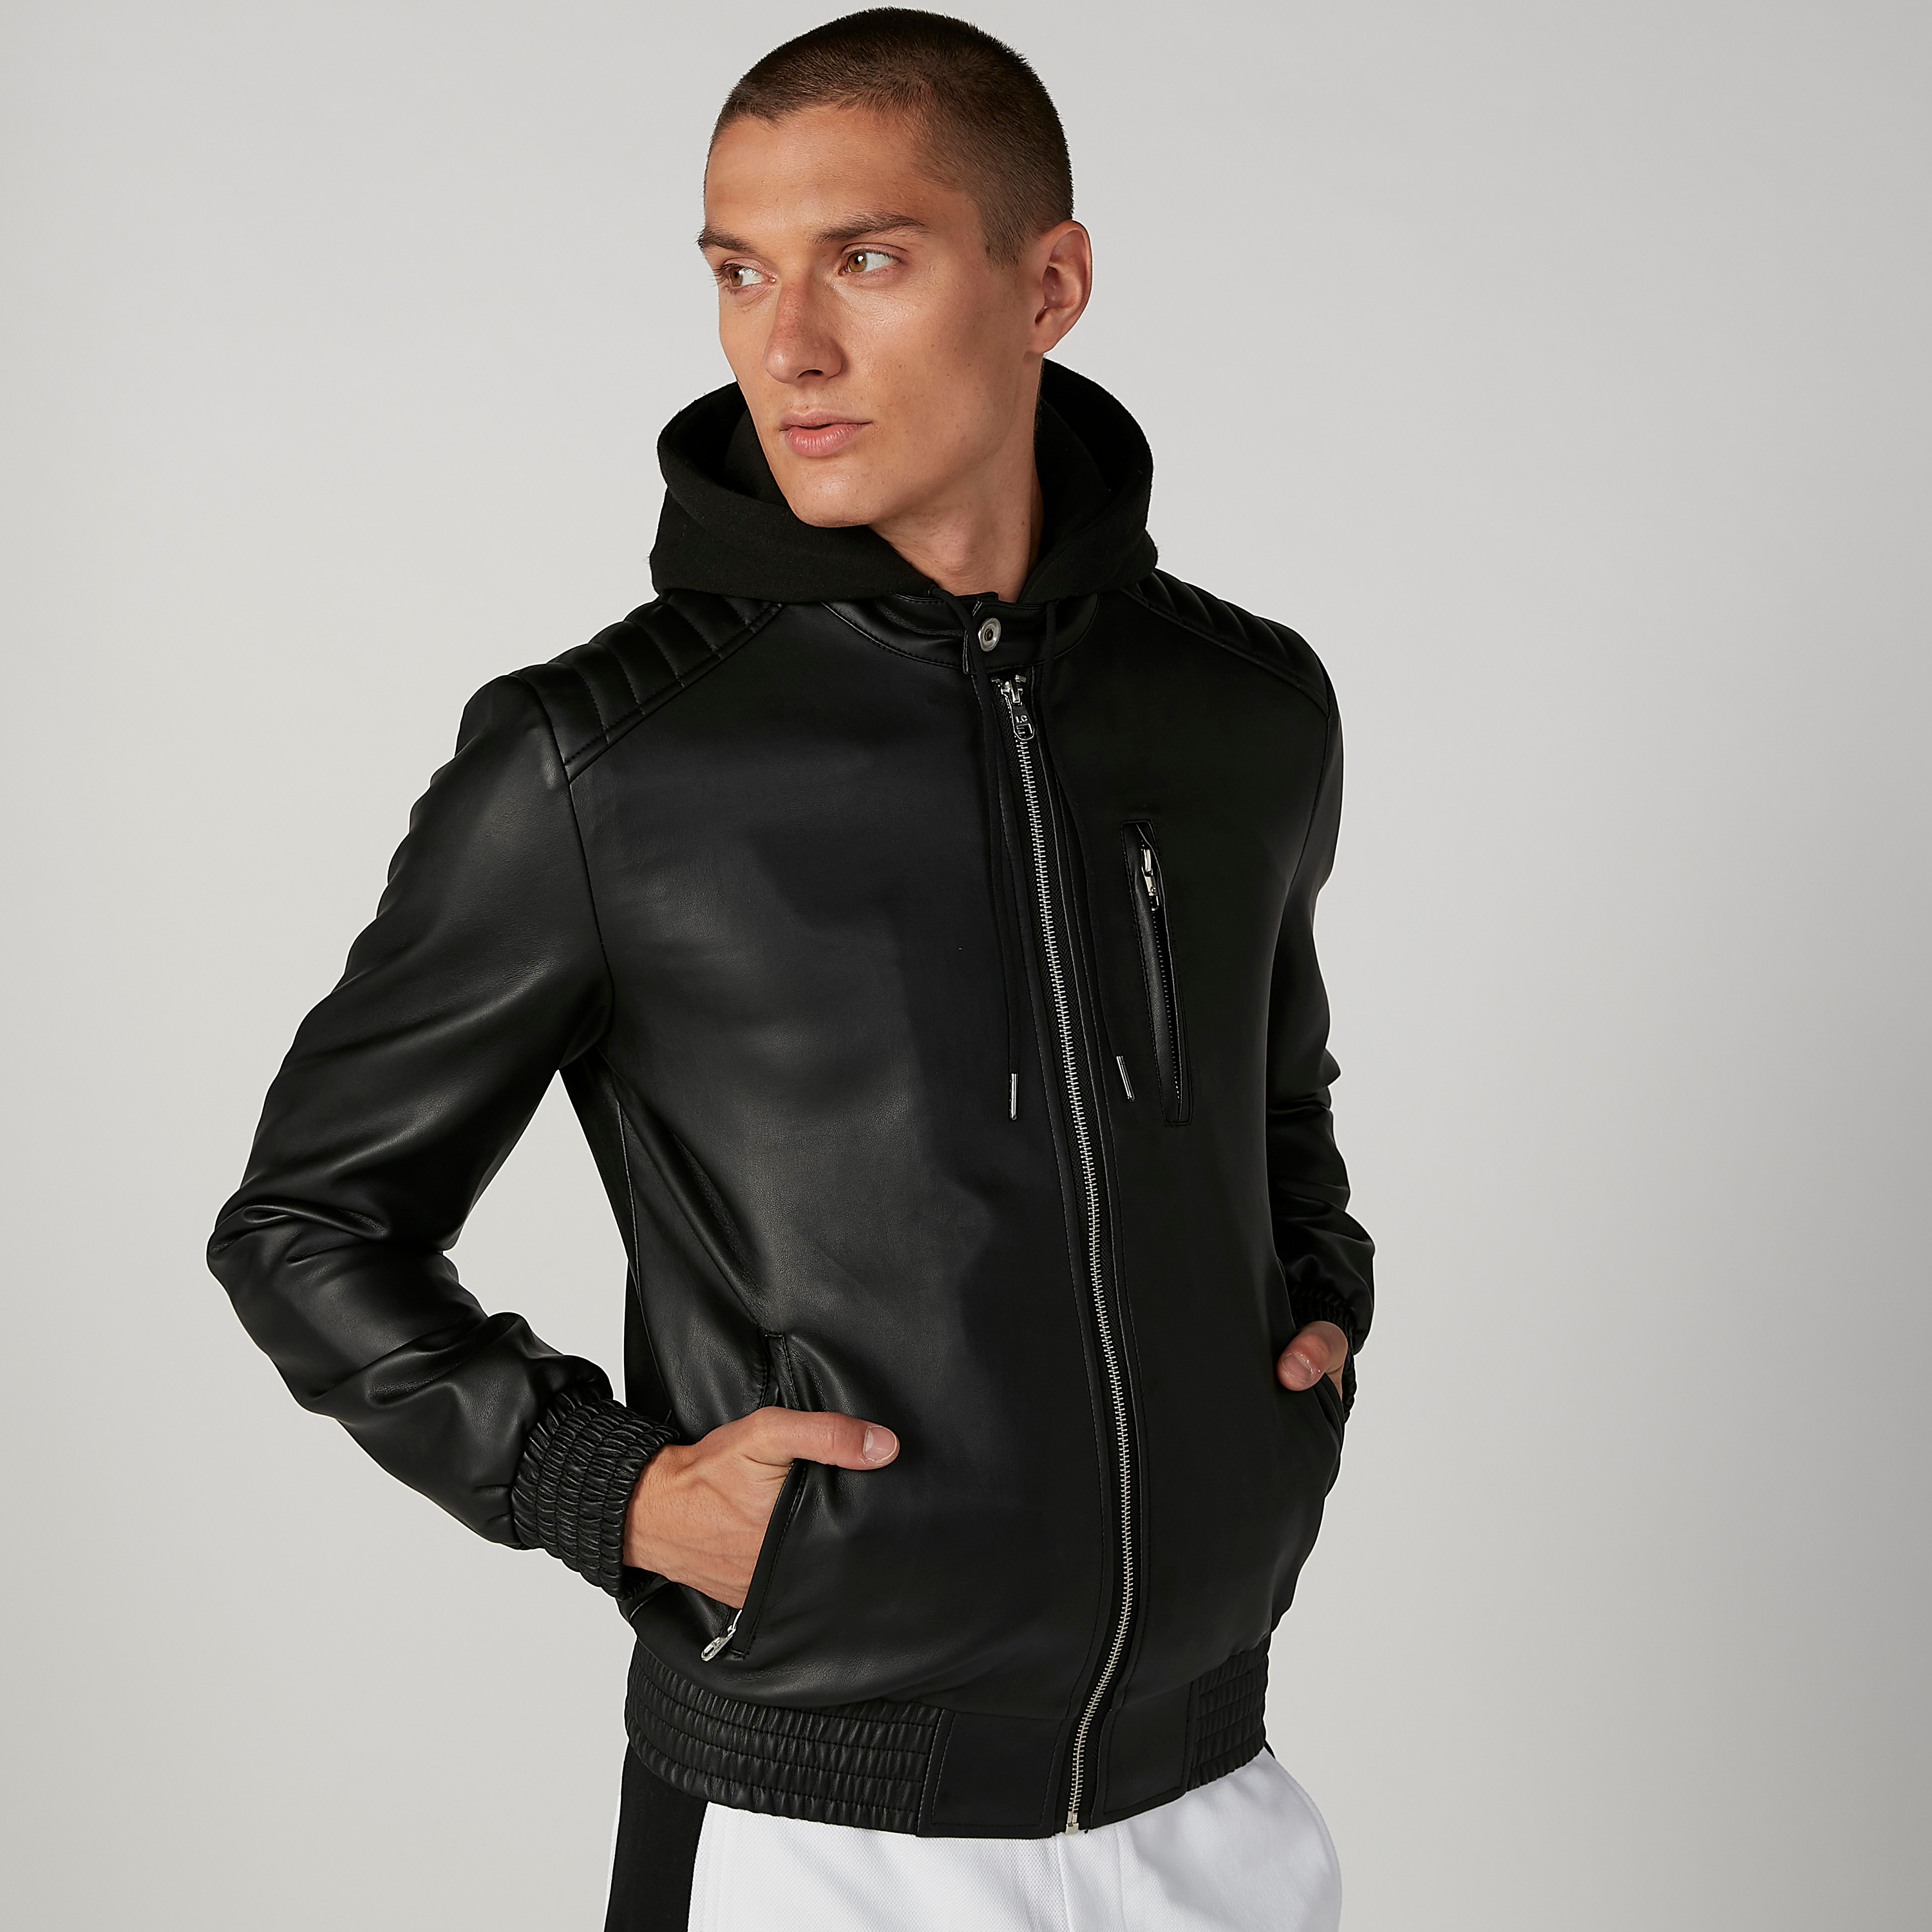 Buy Lee Cooper Men's Jacket (LCOMWJK18204BLACK_Black_XXL) at Amazon.in